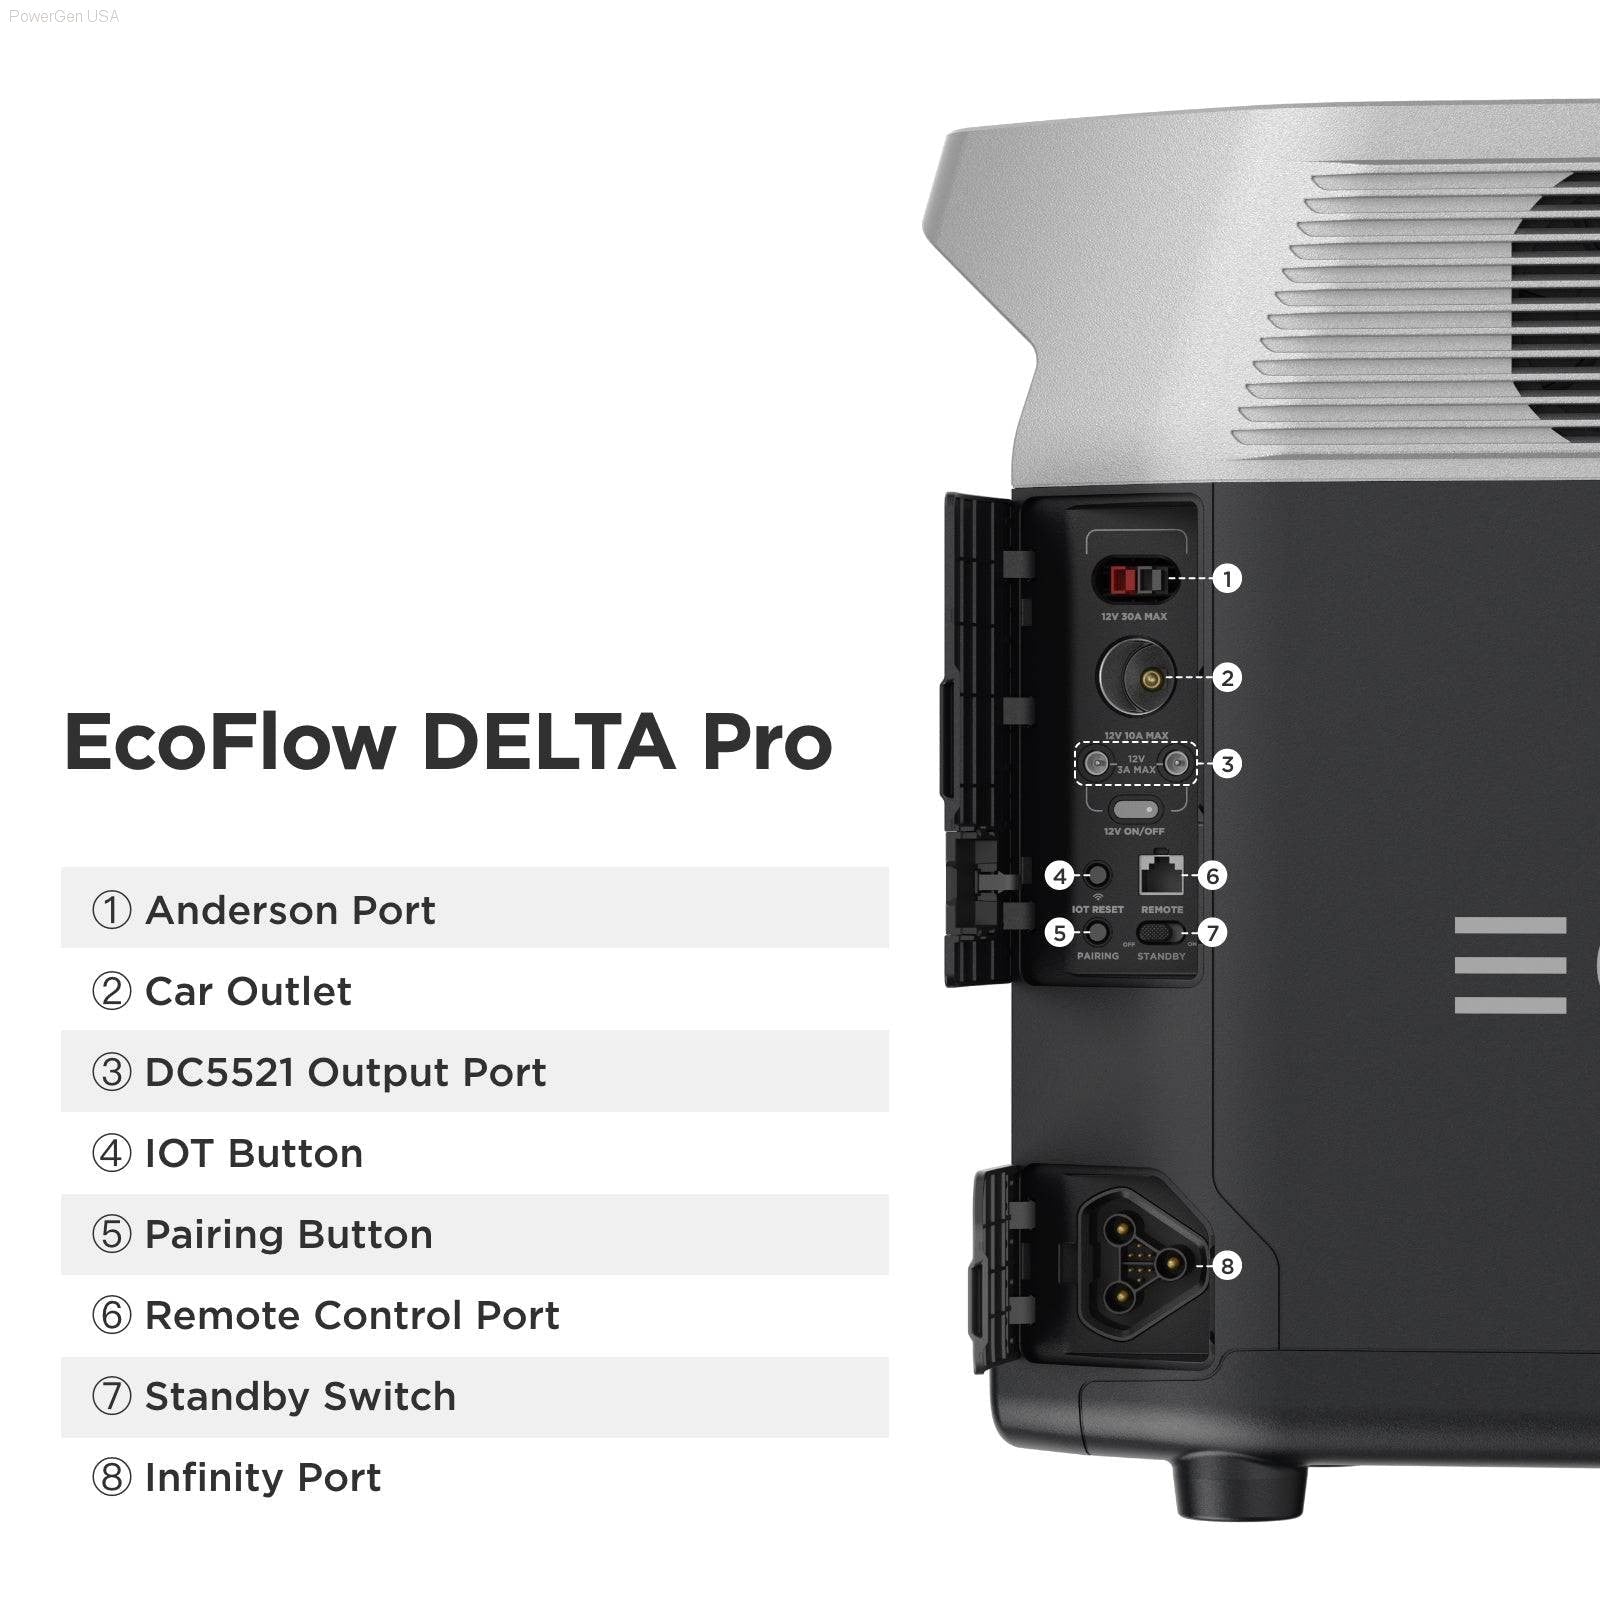 Solar & Battery Powered - EcoFlow DELTA Pro Portable Power Station